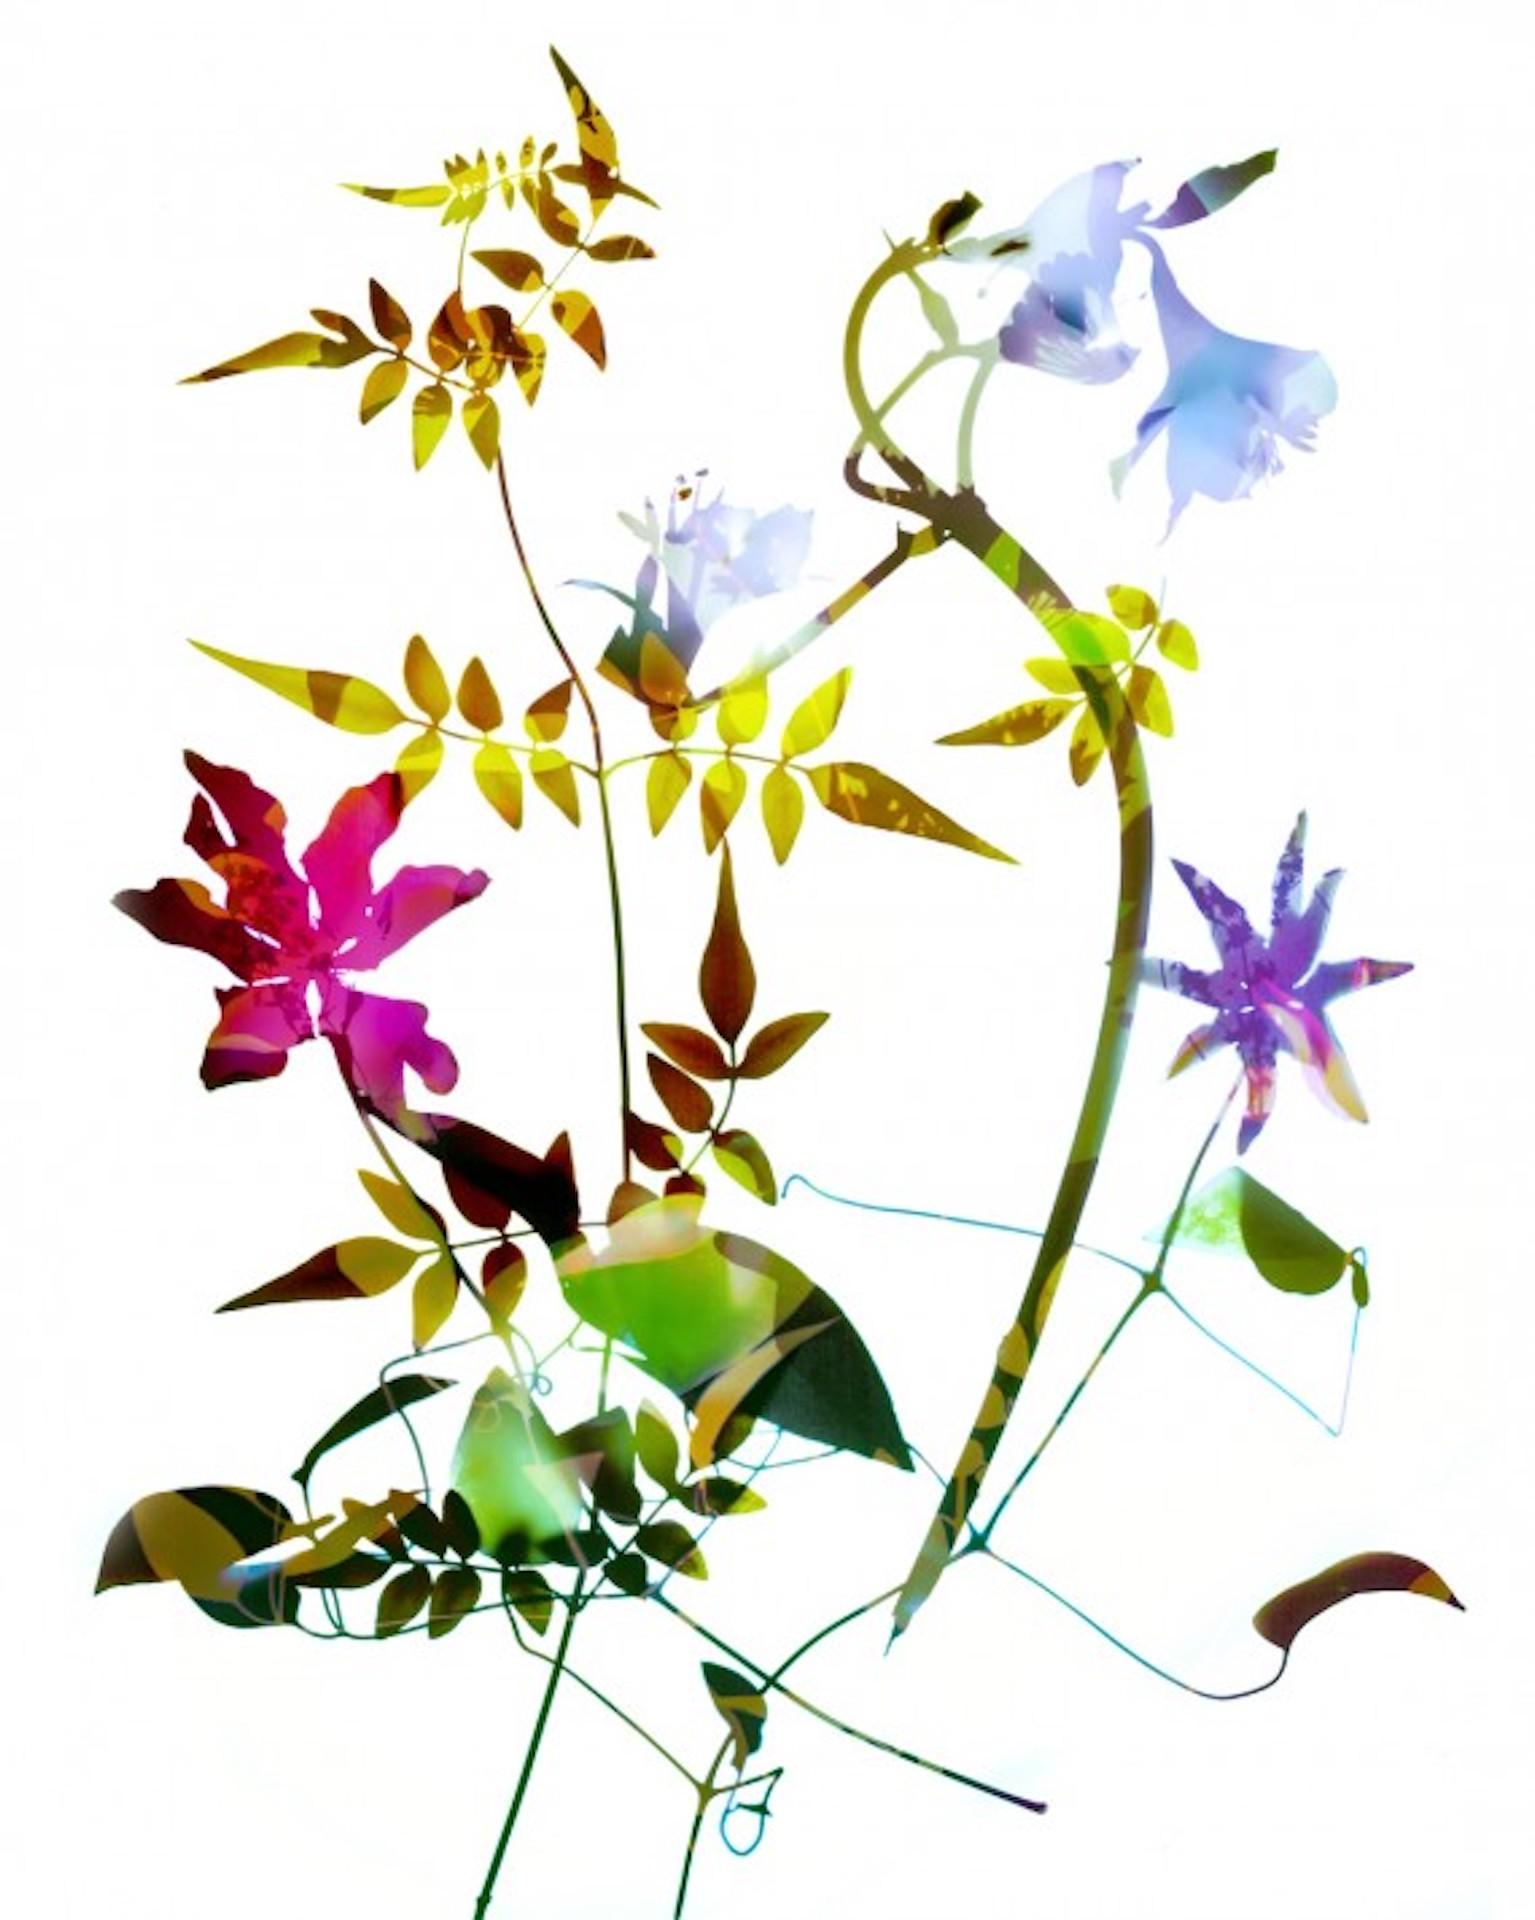 Still-Life Print Allan Forsyth - Gentle Spirit n° 12, Art floral d'affirmation, Art contemporain léger et brillant